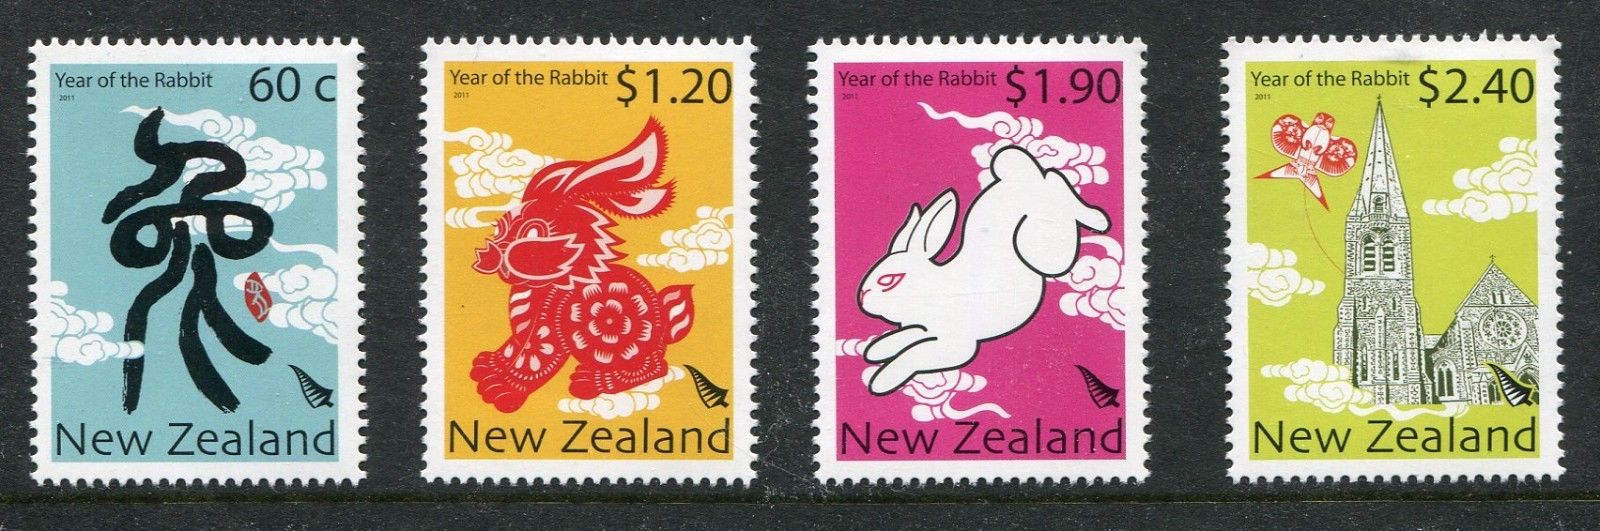 New Zealand 2011 Scott 2346-49, Lunar New Year, Year of the Rabbit, NH